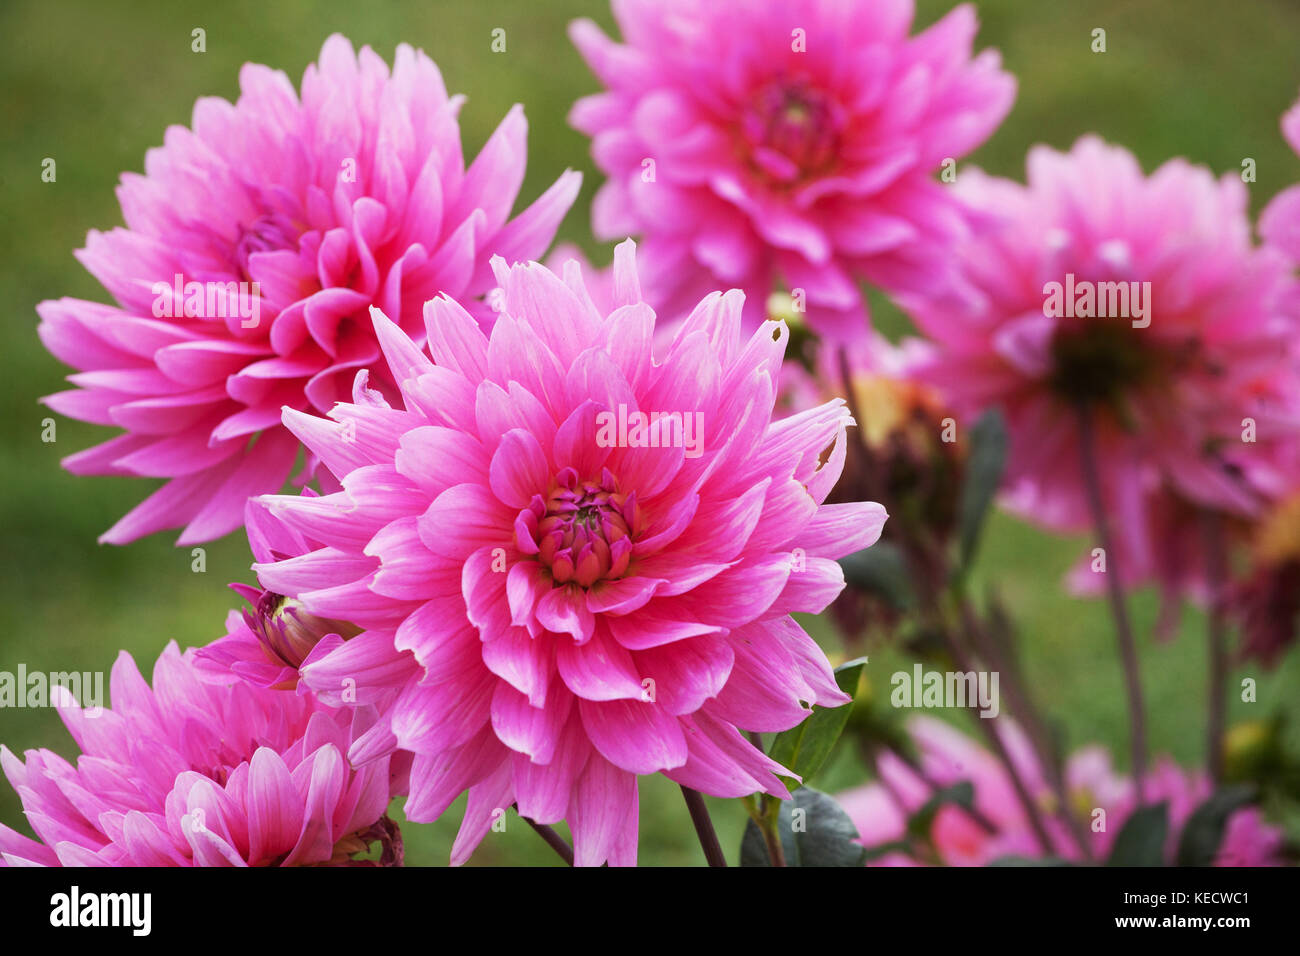 Rosa dahlie "Aquarius" Blumen in voller Blüte Stockfoto